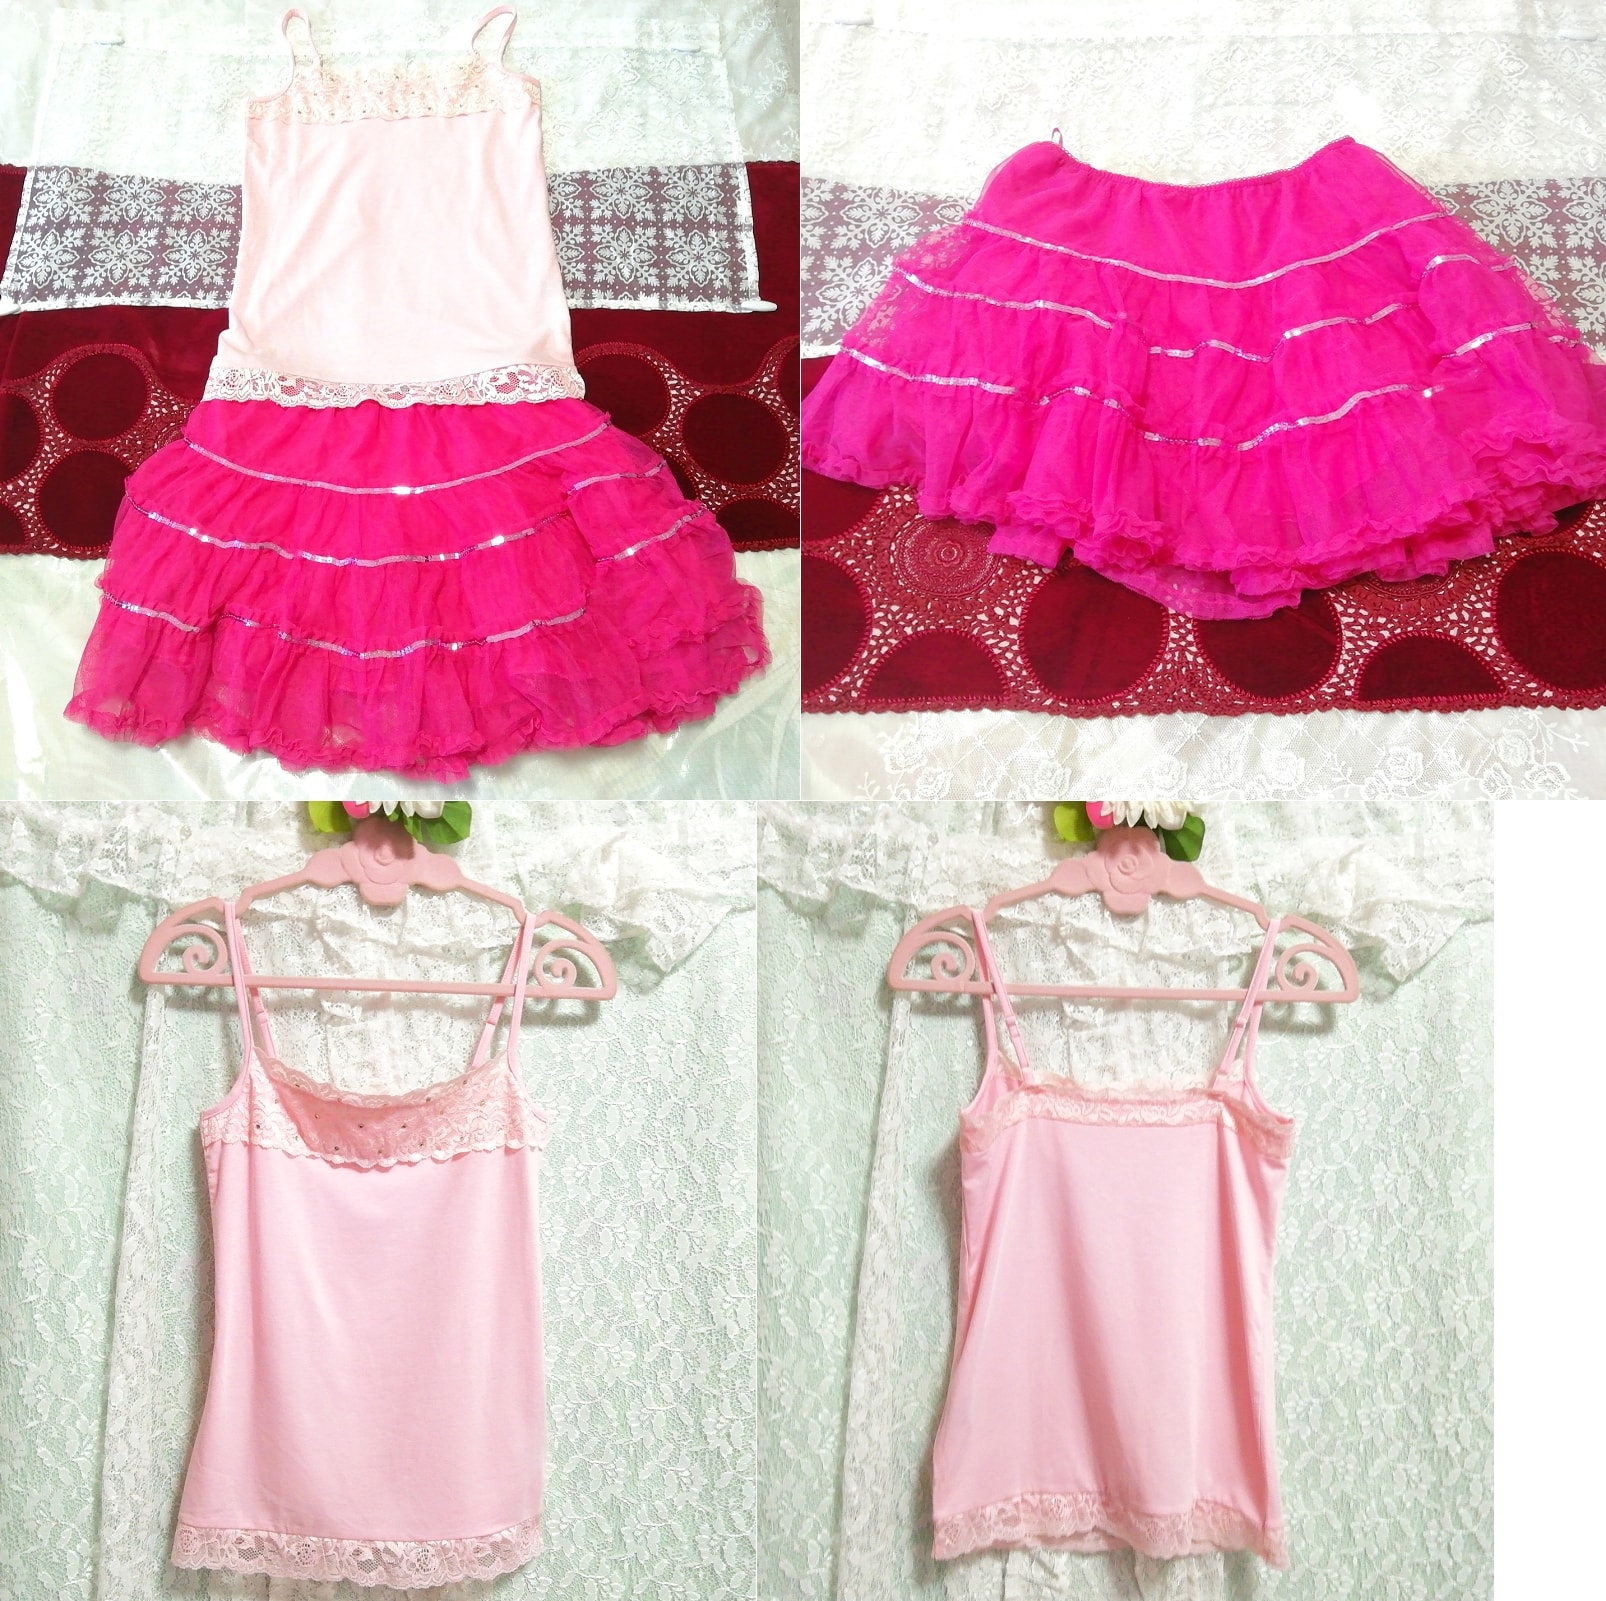 Chemise de nuit négligée caraco en dentelle rose mini-jupe tutu magenta 2P, mode, mode féminine, vêtement de nuit, pyjamas